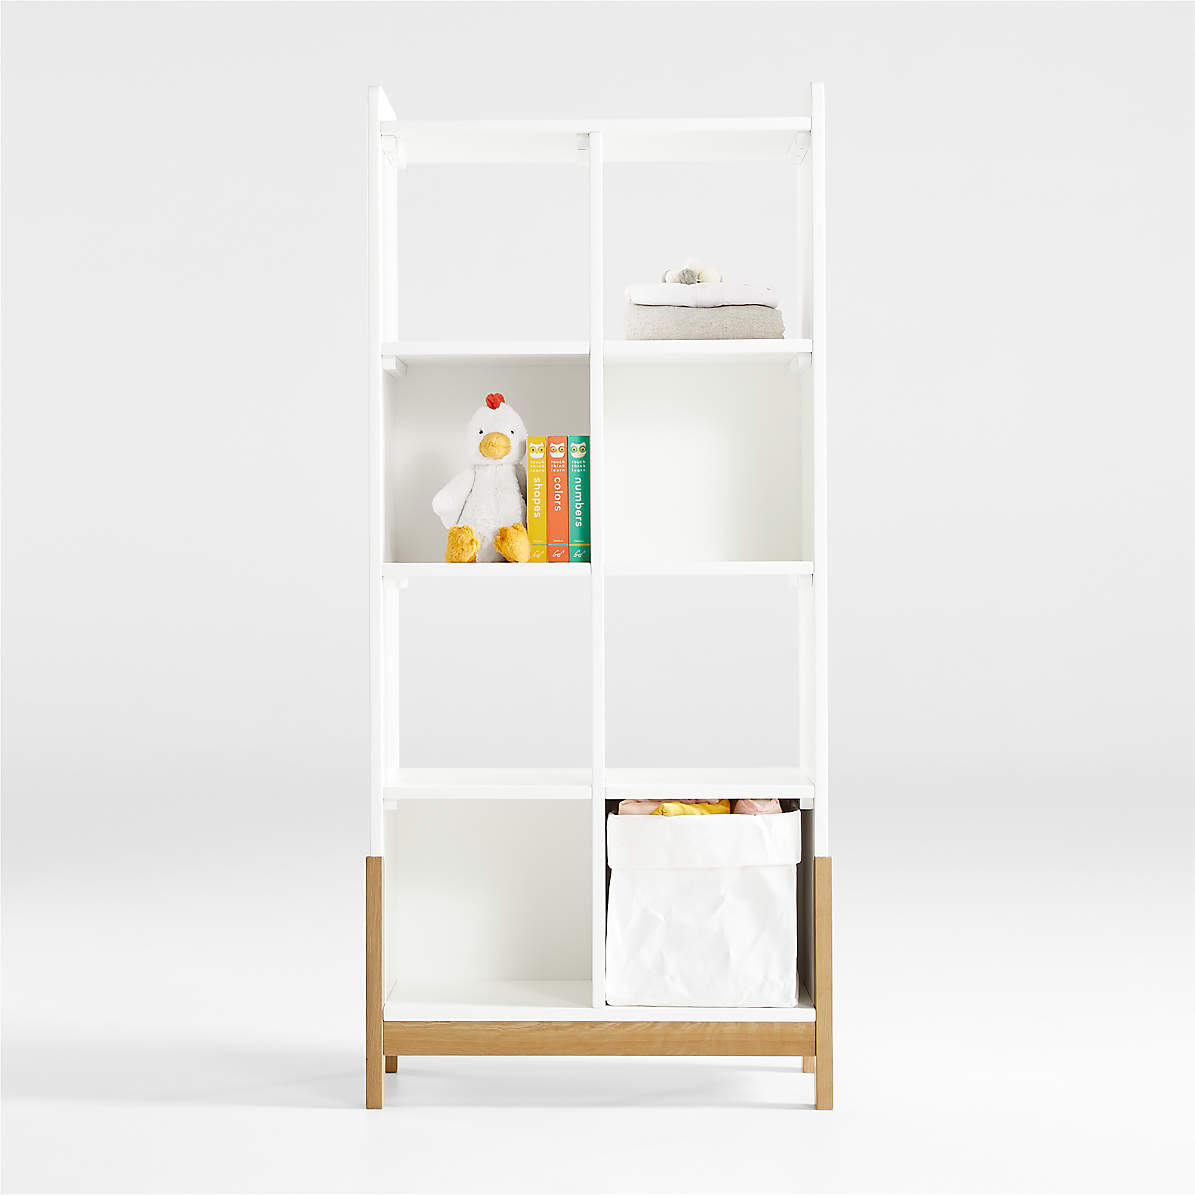 8-Cube Bookshelf Rack Bookcase Stand Storage Shelf Display Cabinet Shelves White